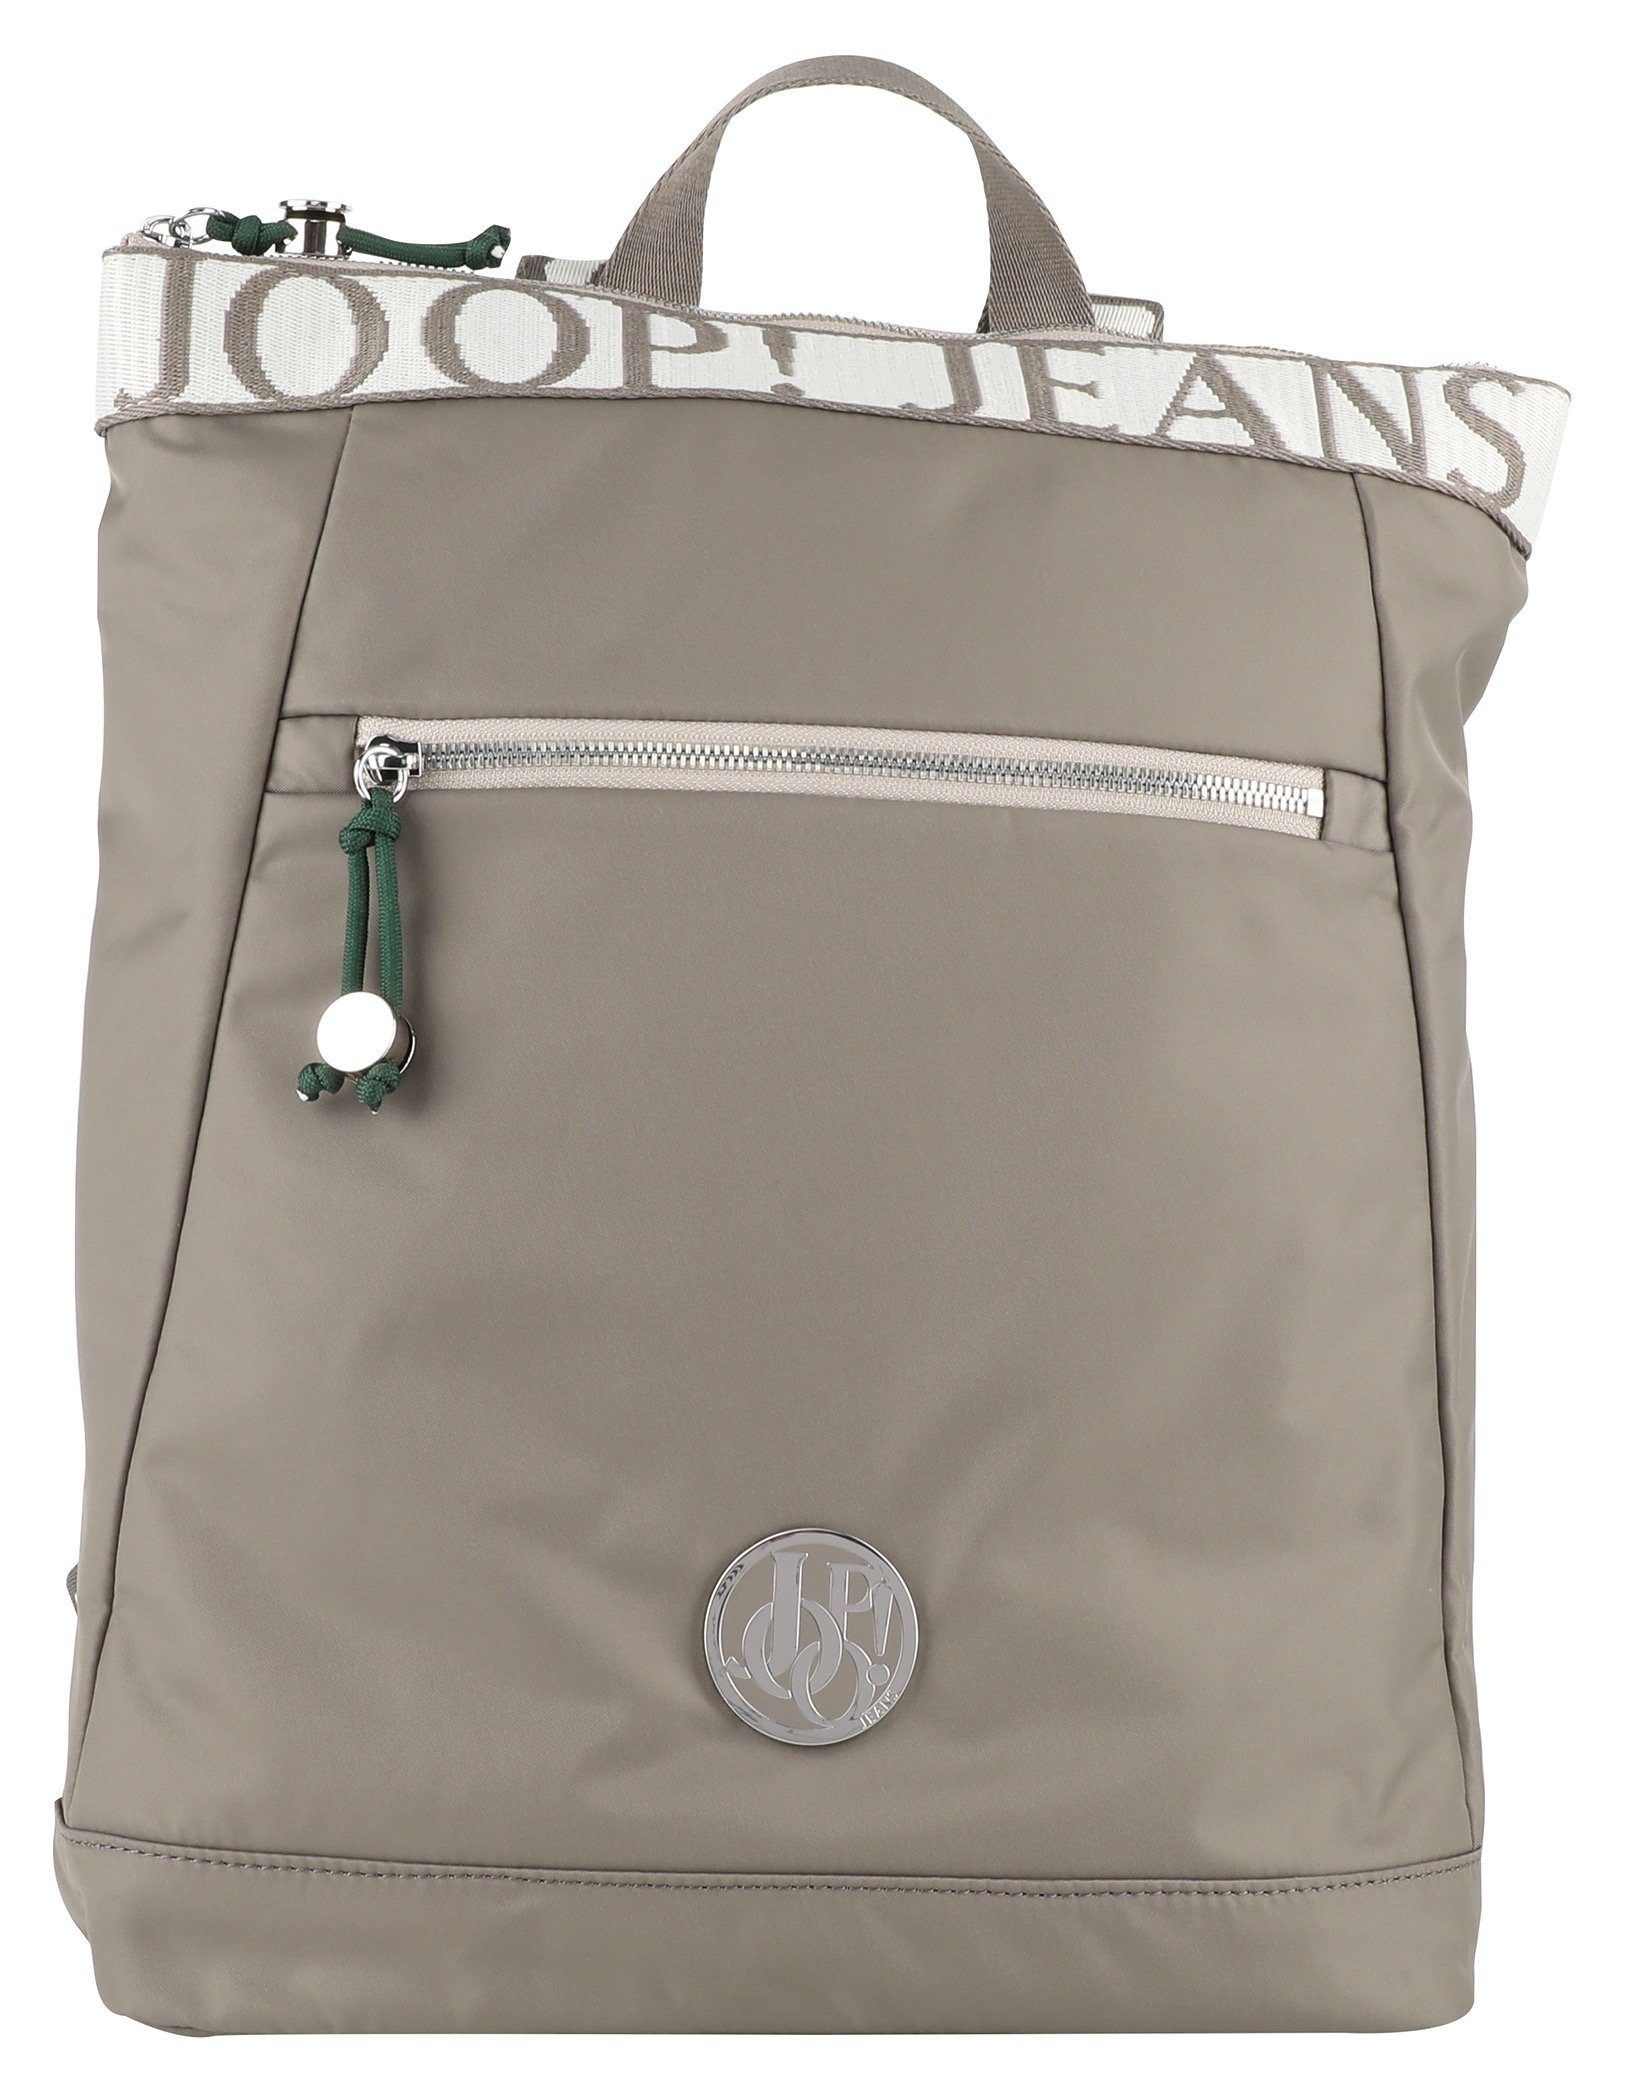 Logo Trageriemen Cityrucksack Schriftzug auf mit Jeans elva grey lvz, Joop lietissimo den backpack